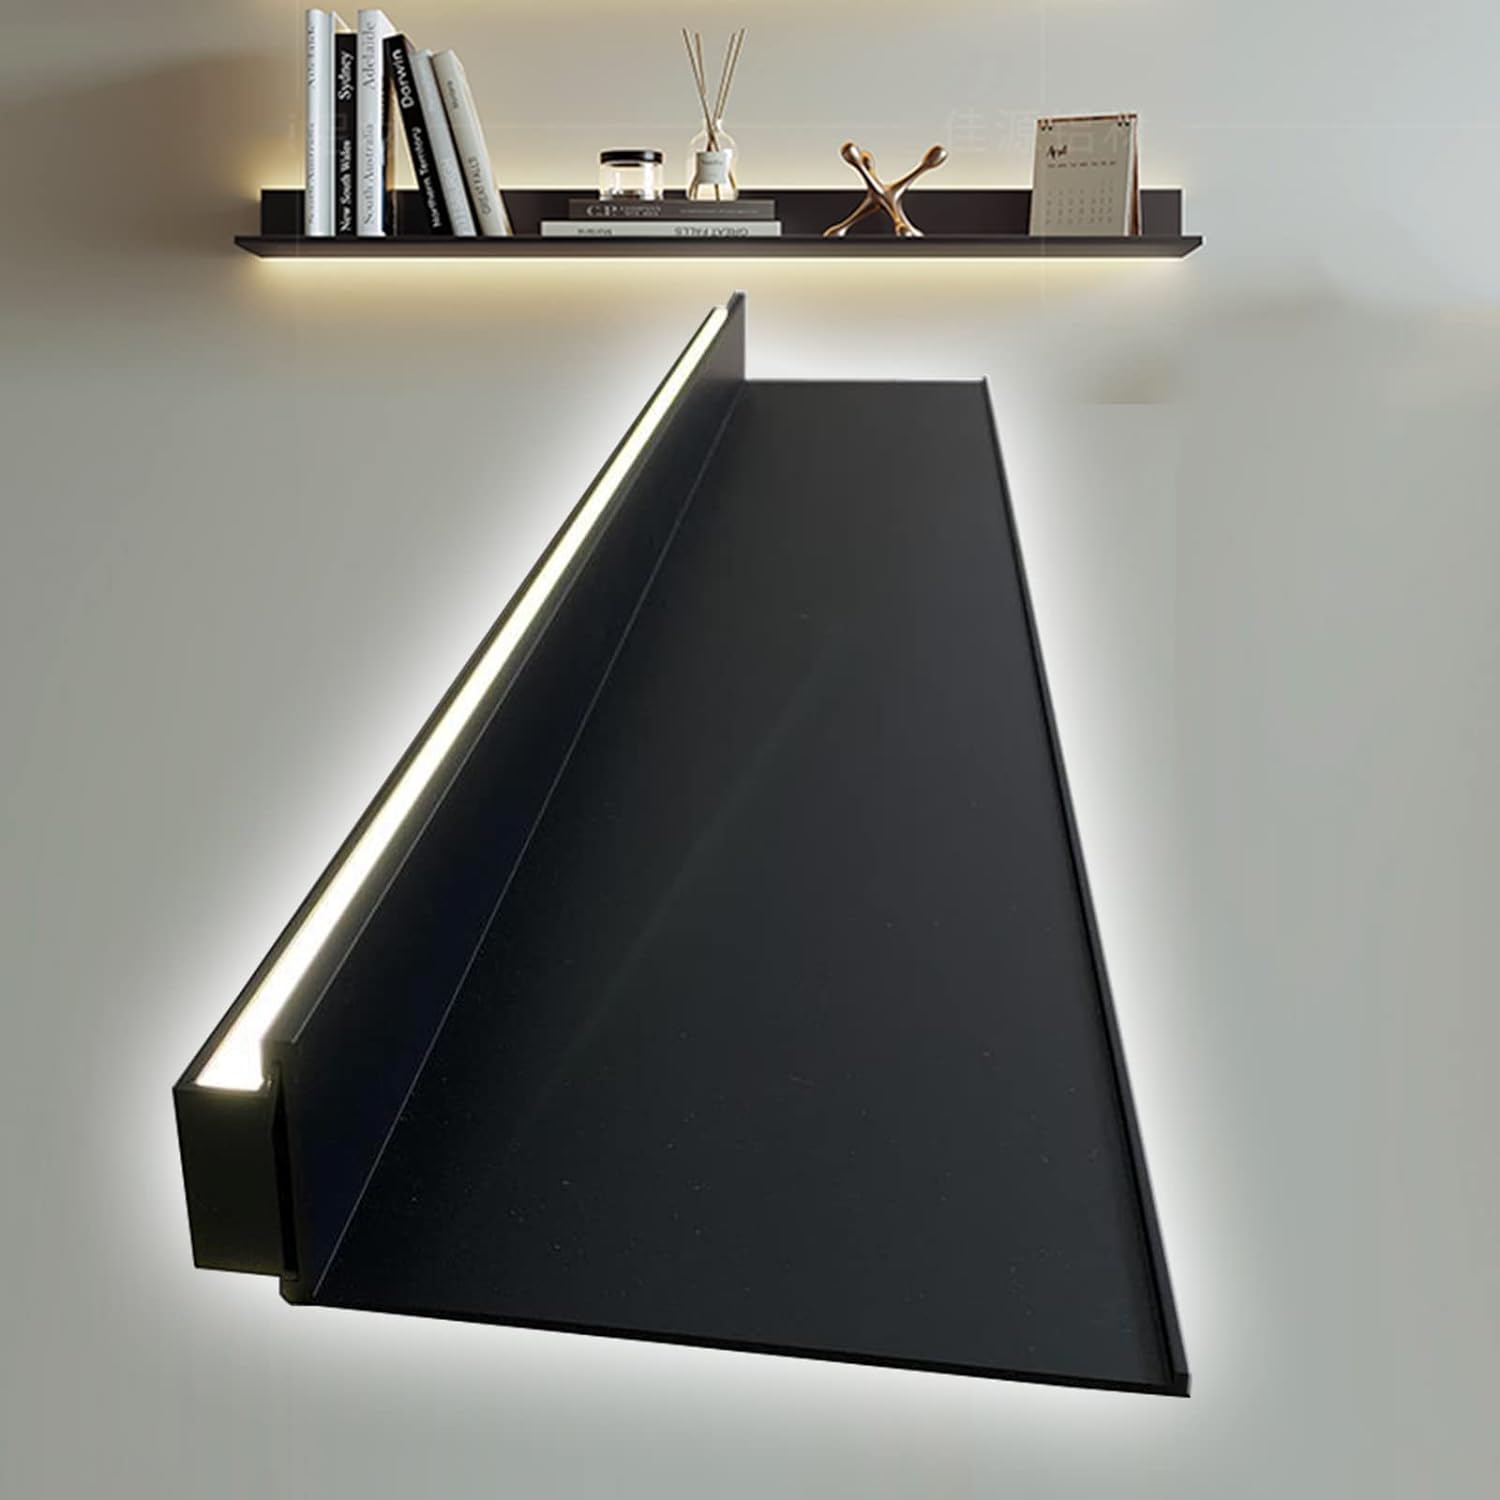 Floating Display Shelf with LED Light